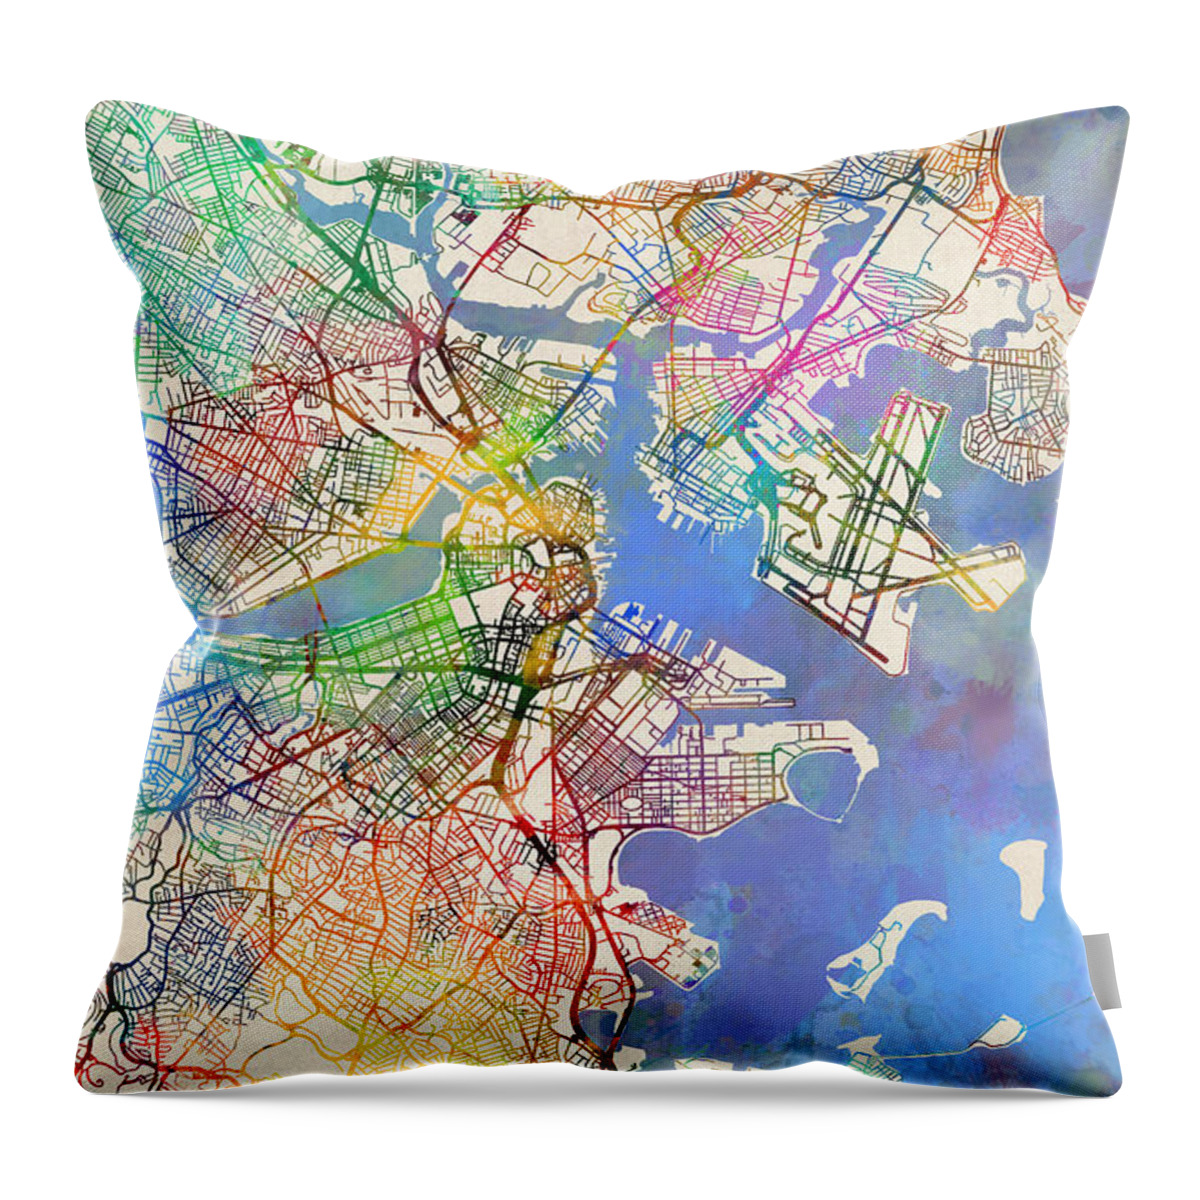 Street Map Throw Pillow featuring the digital art Boston Massachusetts Street Map Extended View by Michael Tompsett